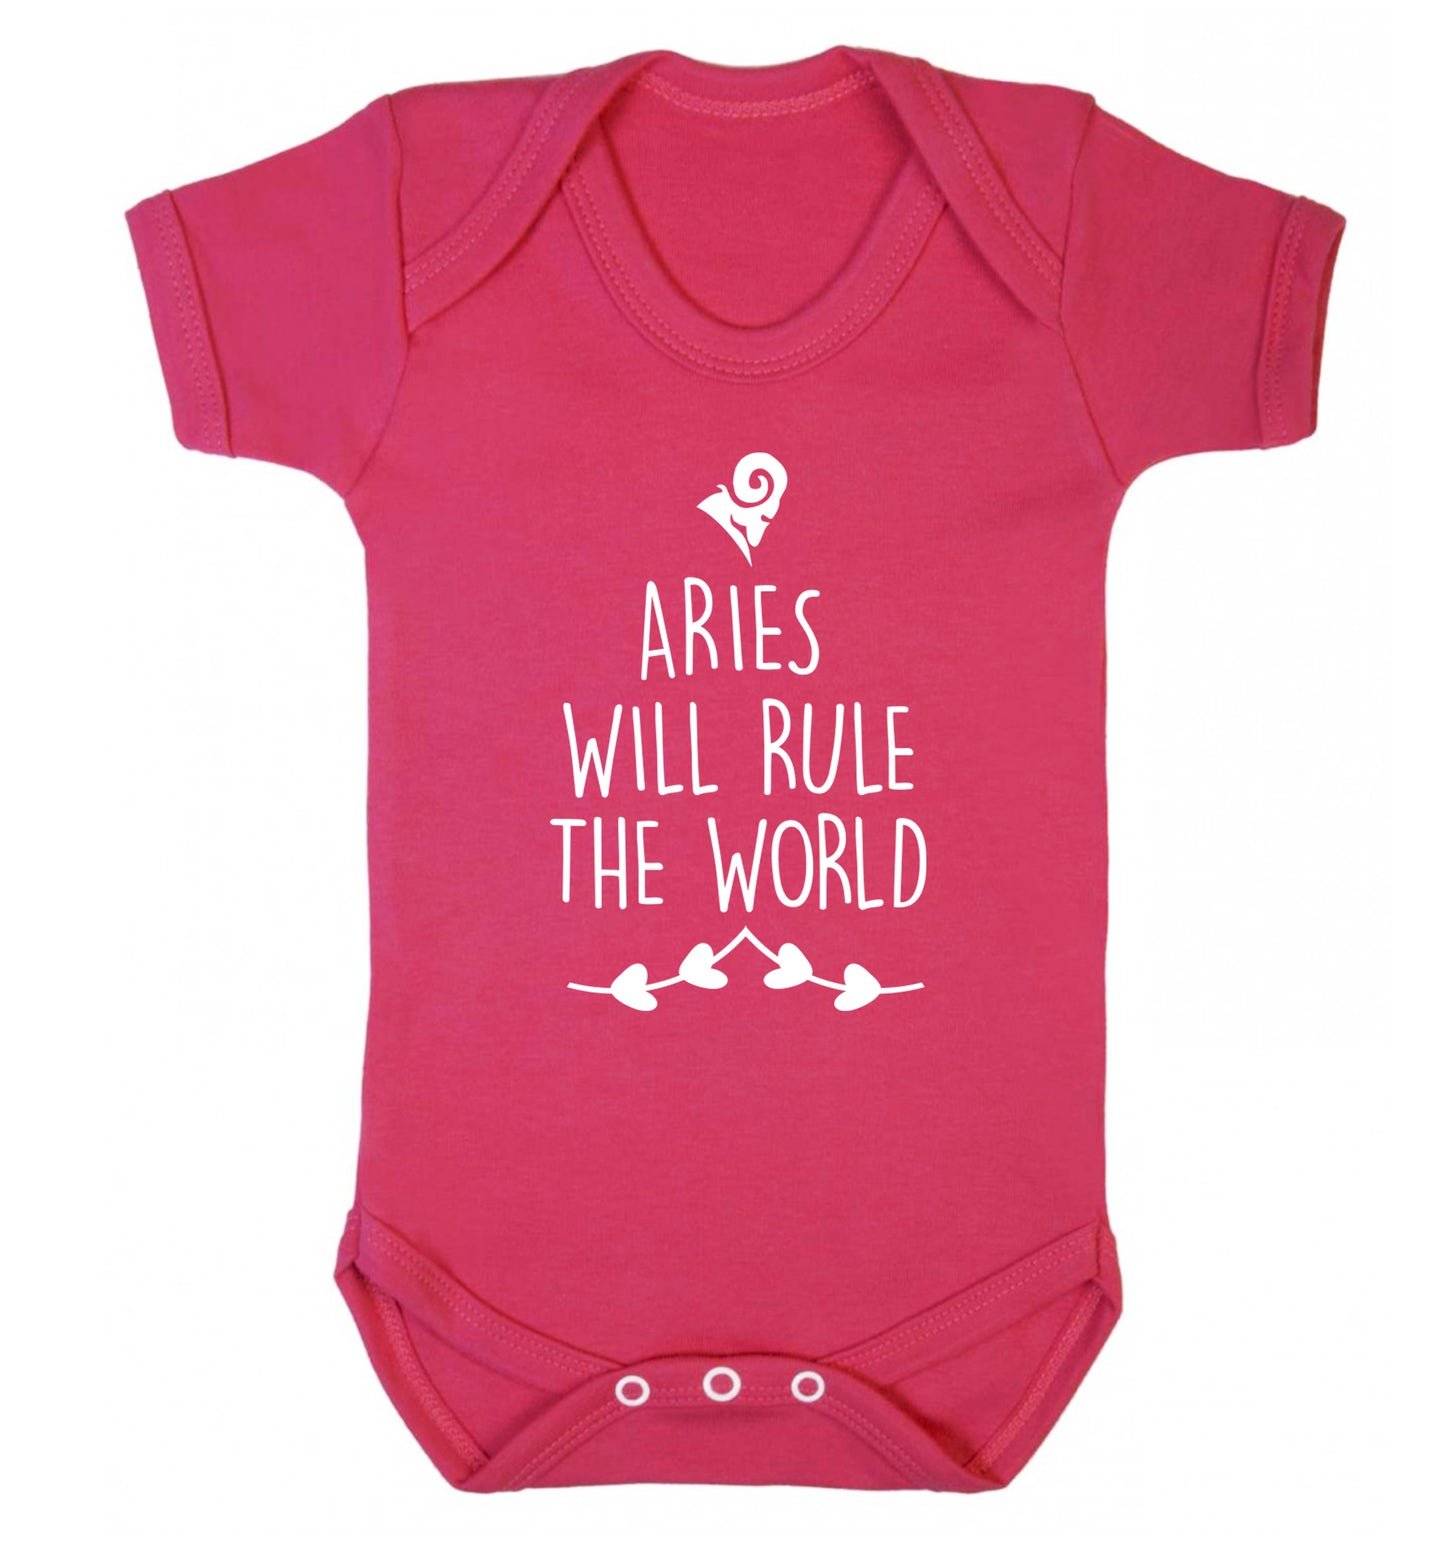 Aries will rule the world Baby Vest dark pink 18-24 months